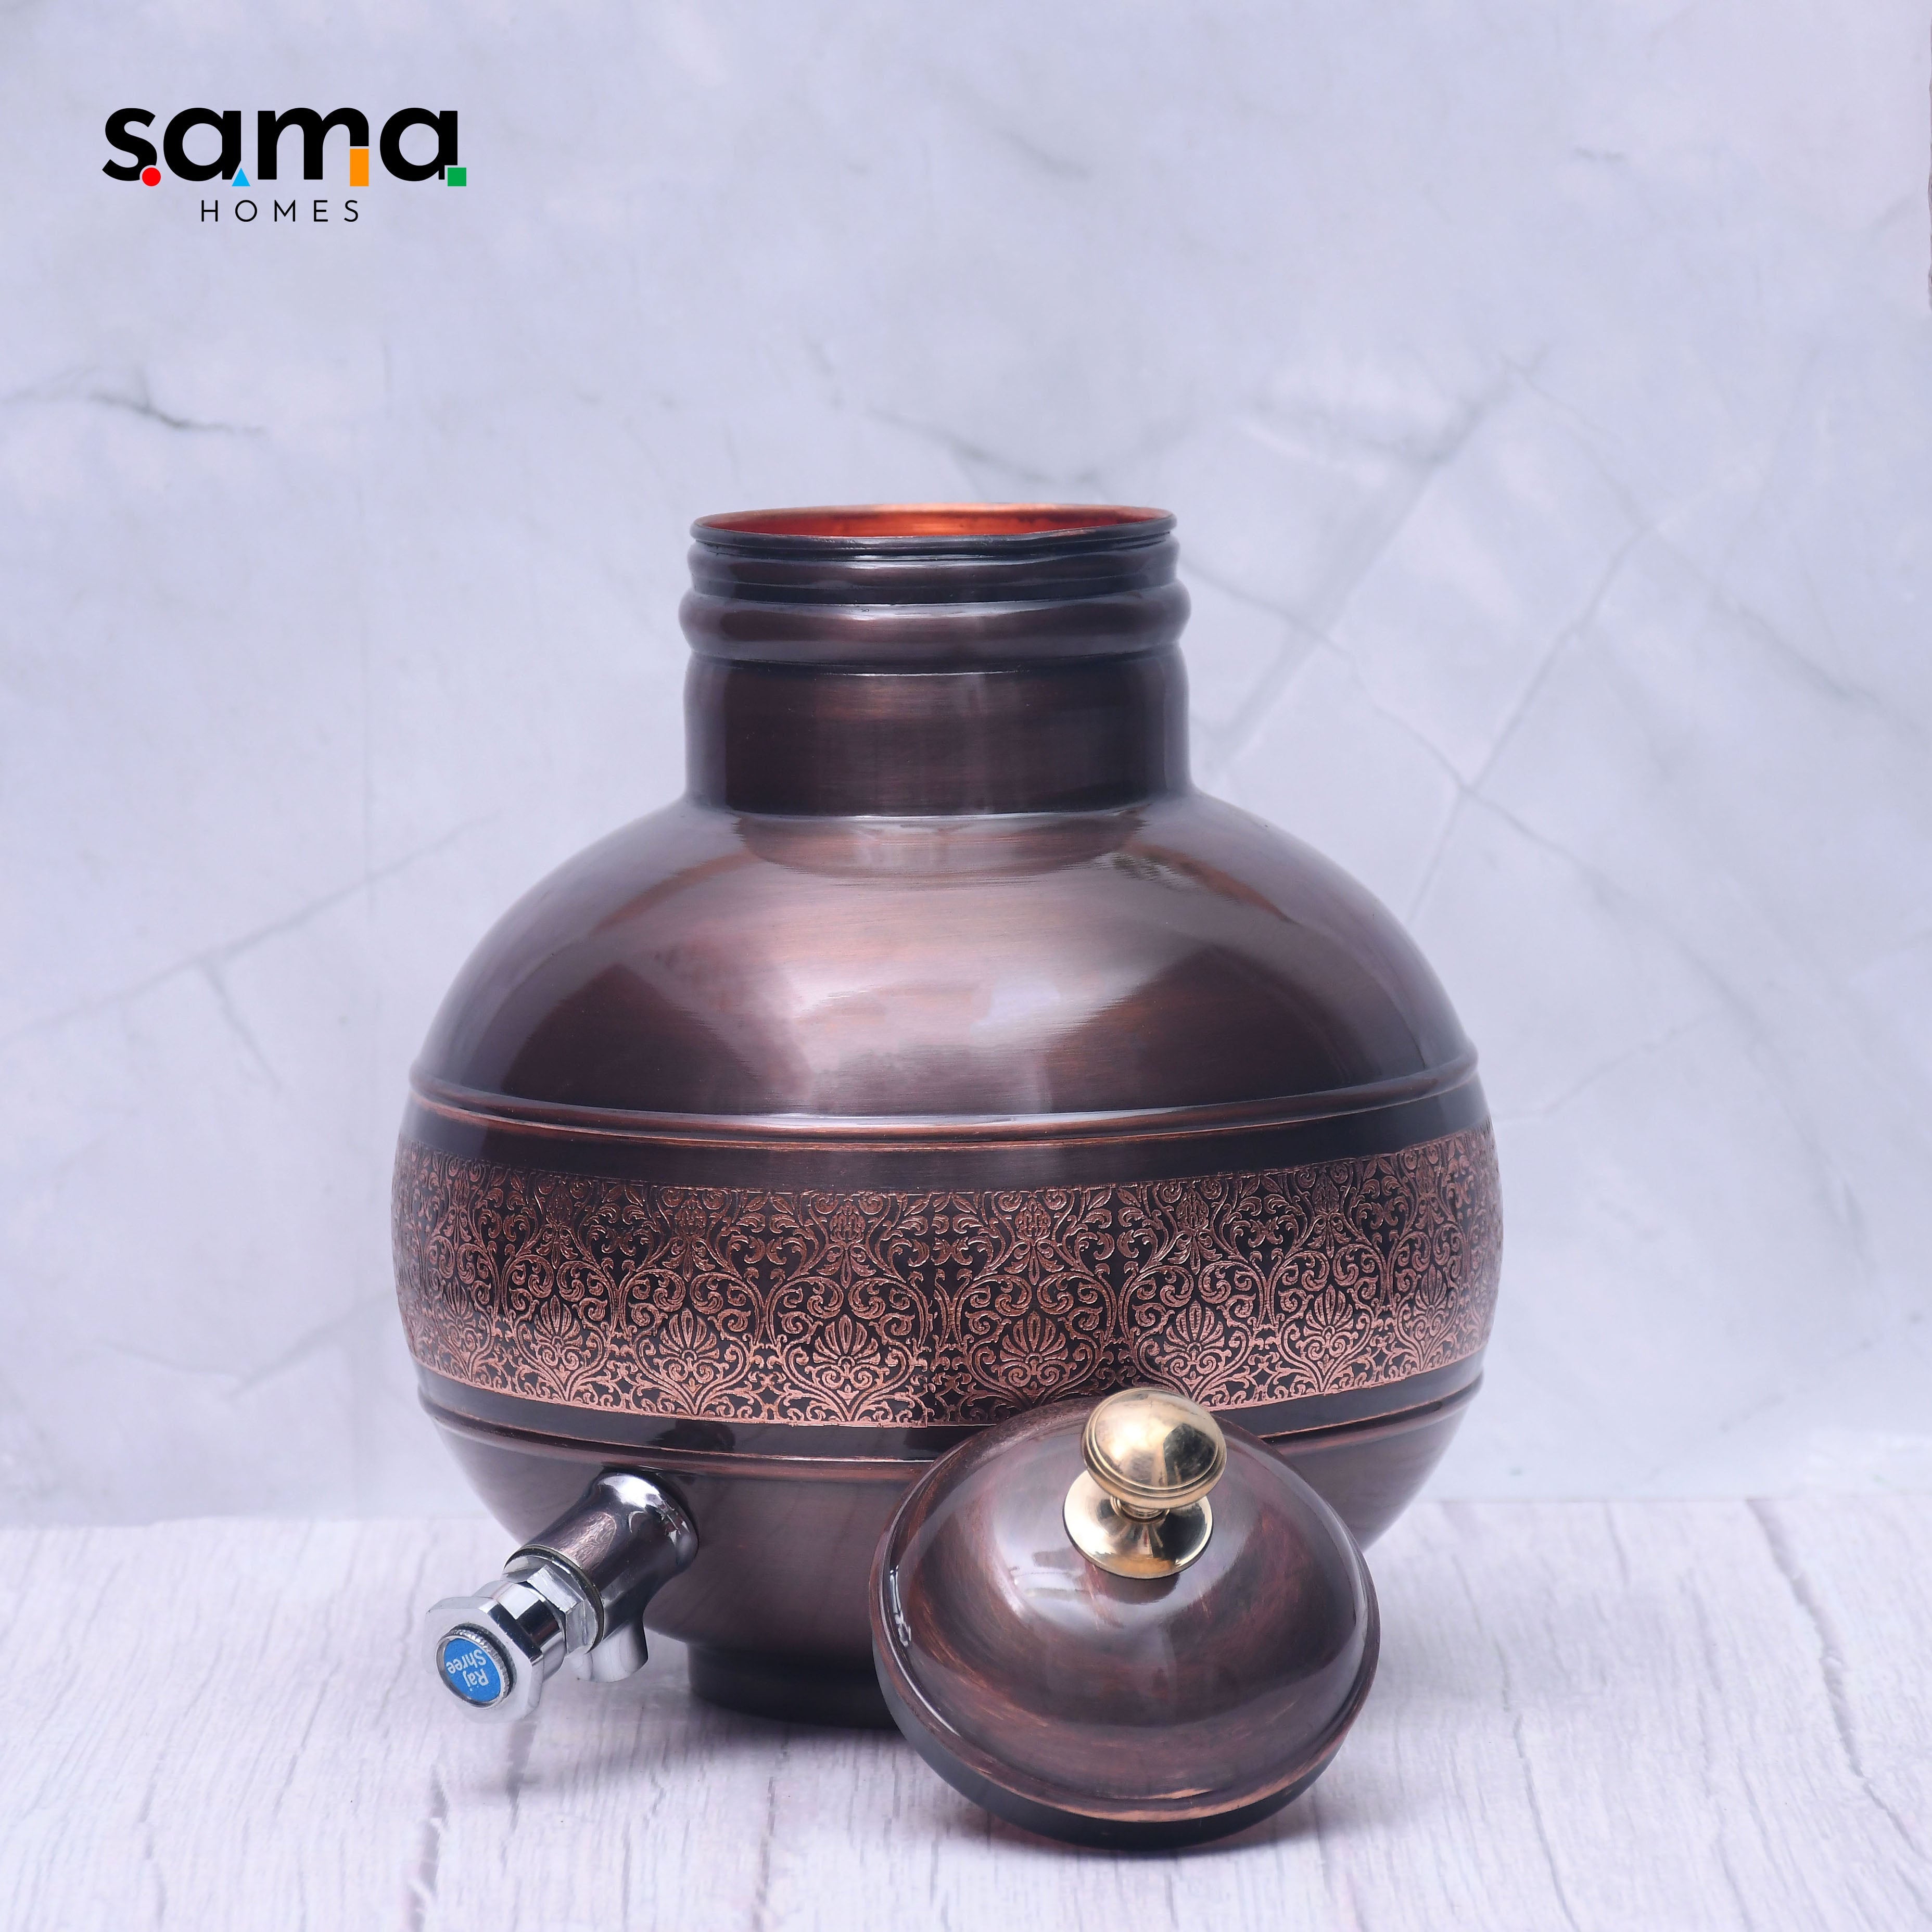 Pure Copper Water Dispenser Antique Engraved Ghada/Pot  Capacity 5000ML